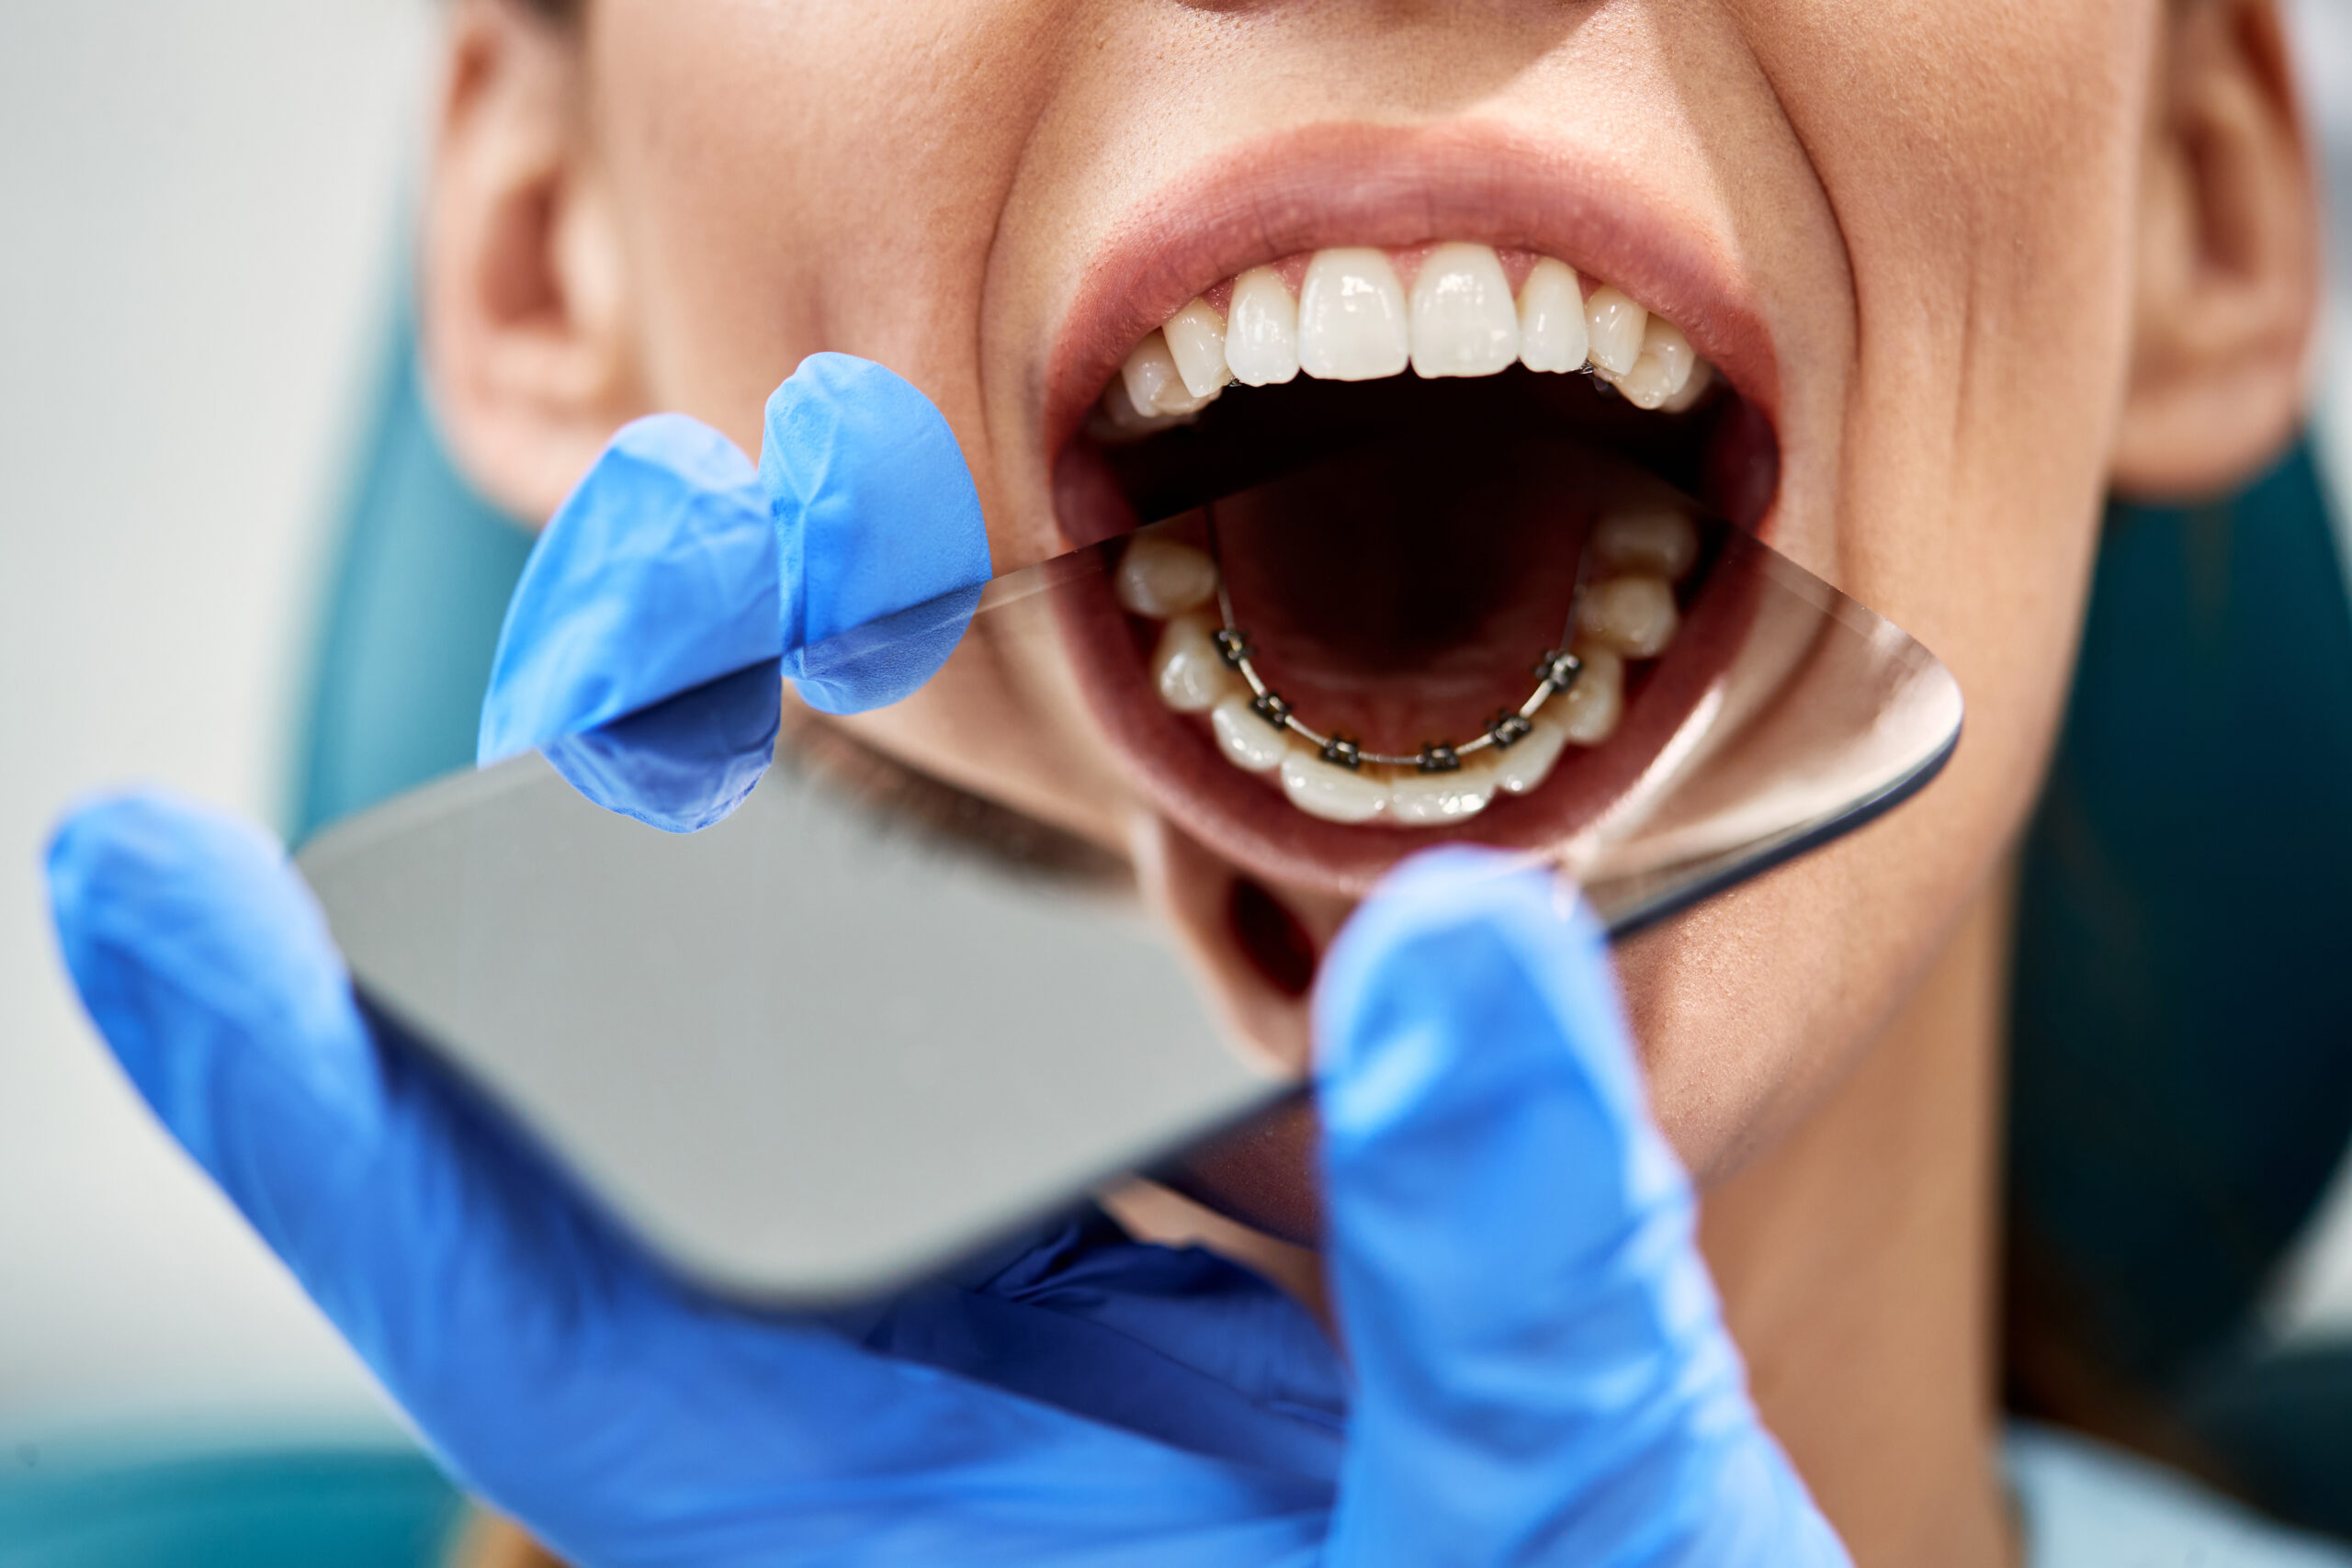 Braces | American Association of Orthodontists